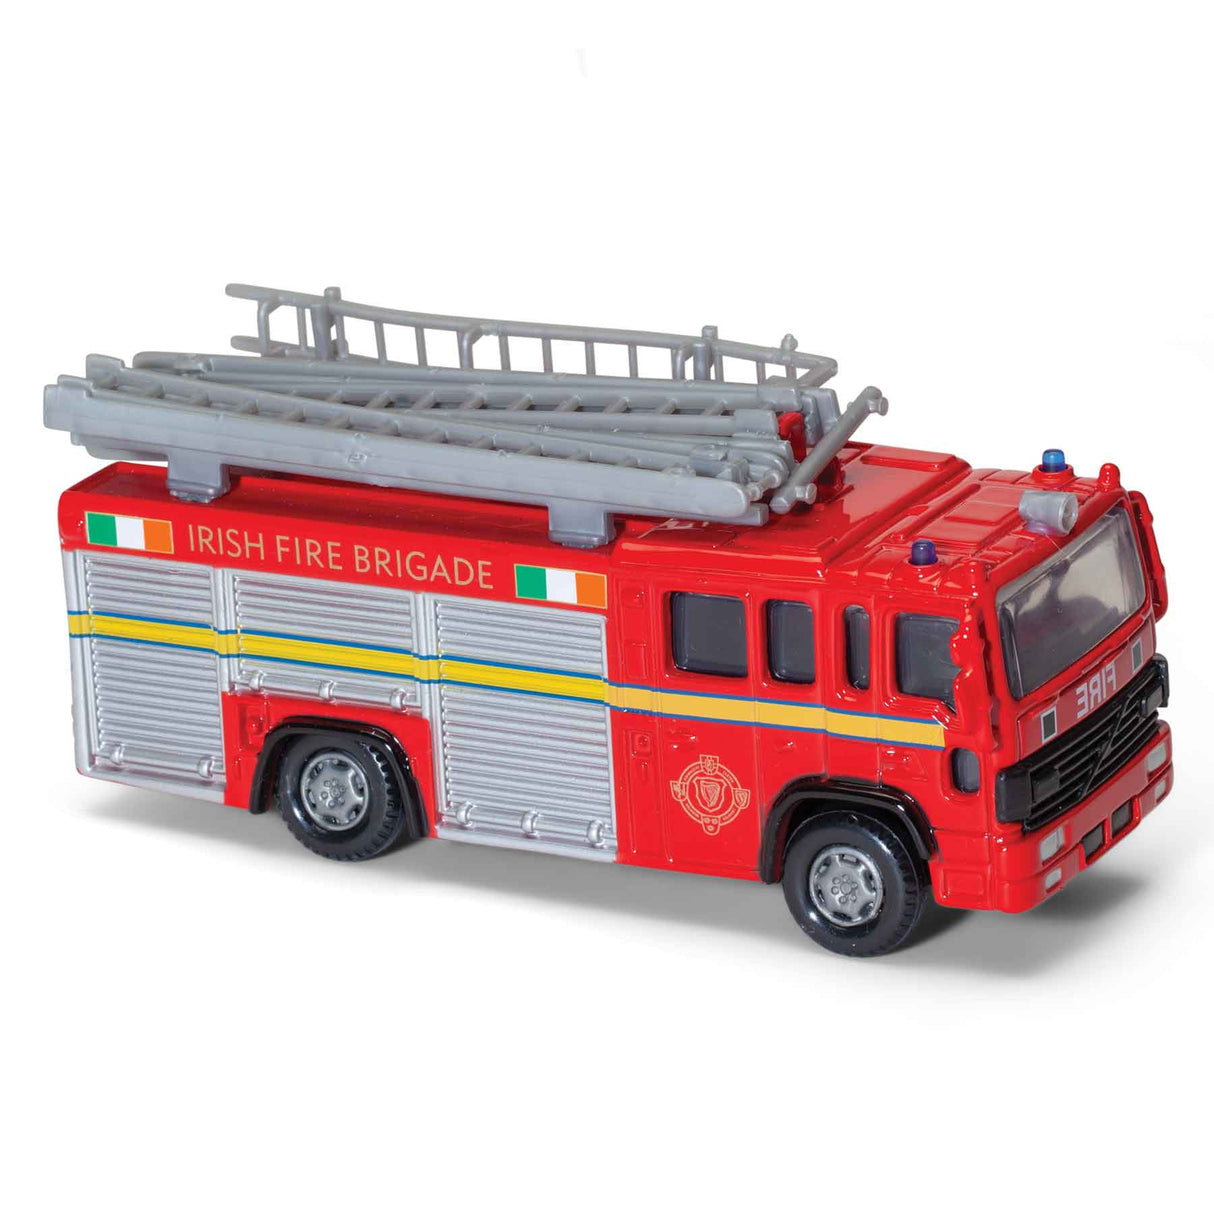 Irish Fire Brigade Model Car - Creative Irish Gifts